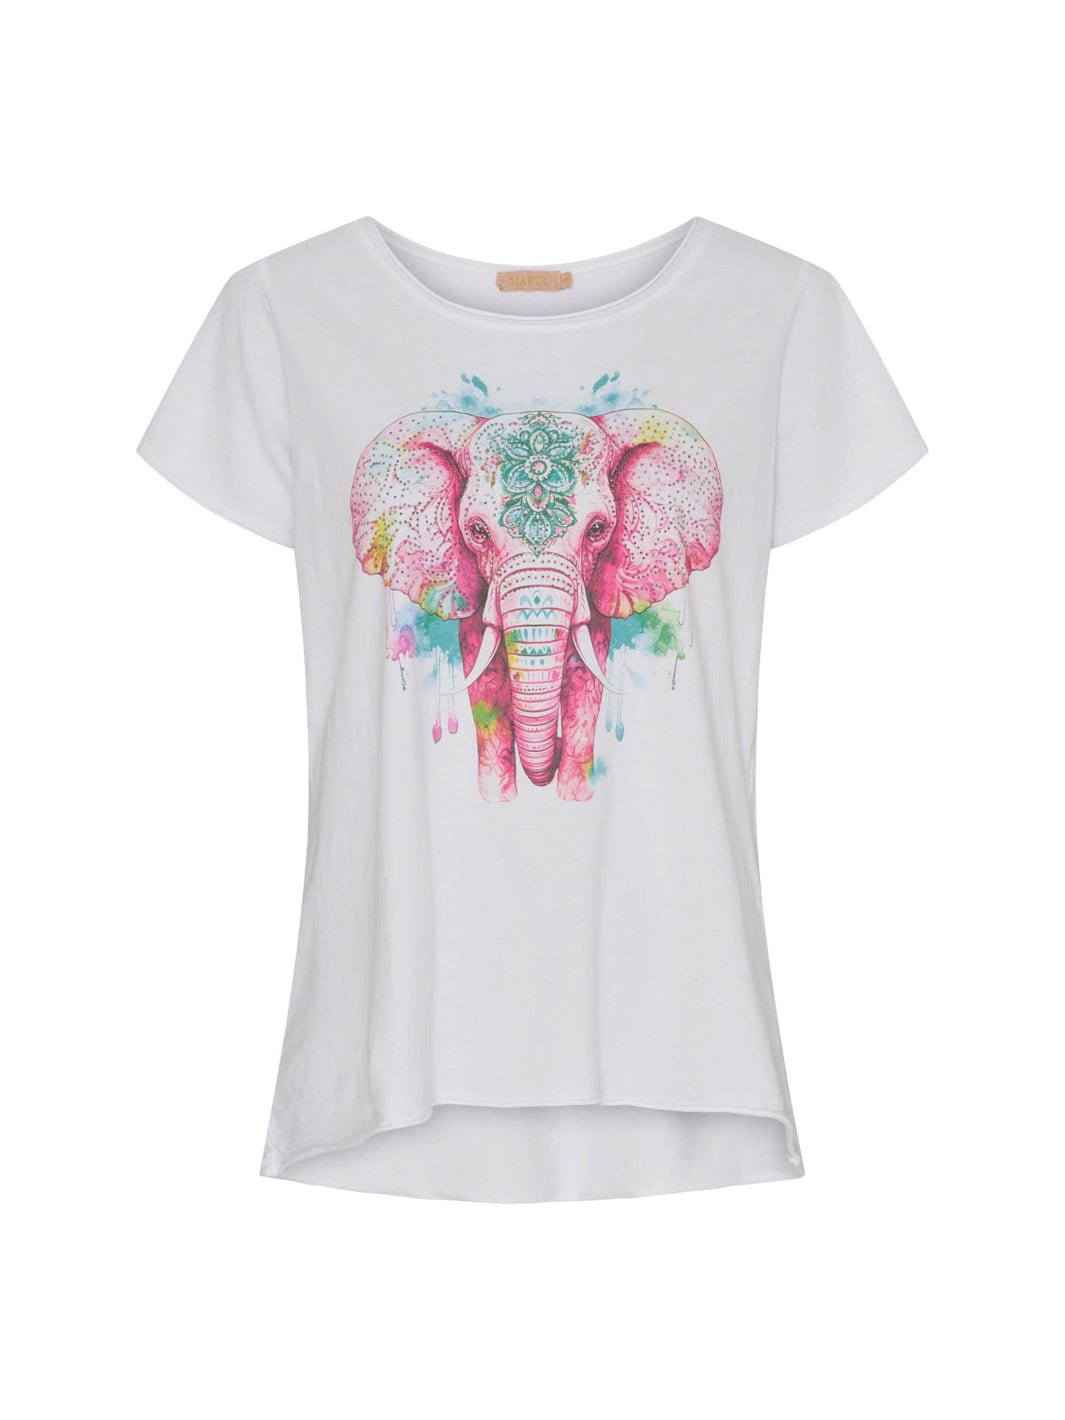 Marta du Chateau Marie 1535 t-shirt pink elephant - Online-Mode